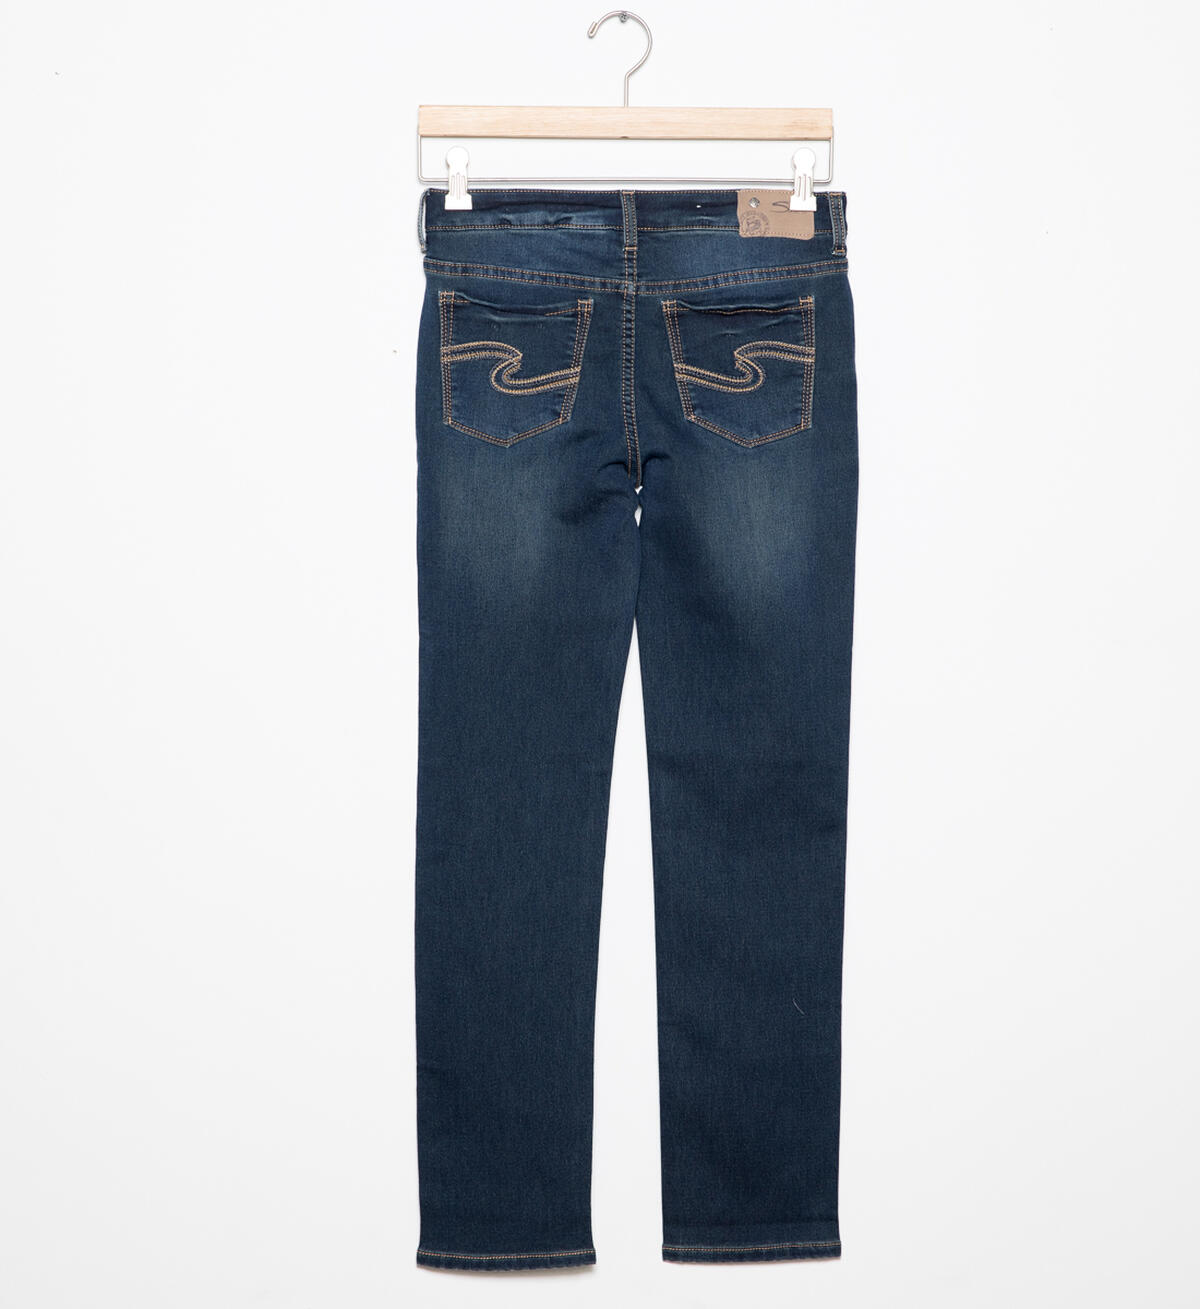 Nathan Skinny Jeans in Dark Wash (7-16), , hi-res image number 1